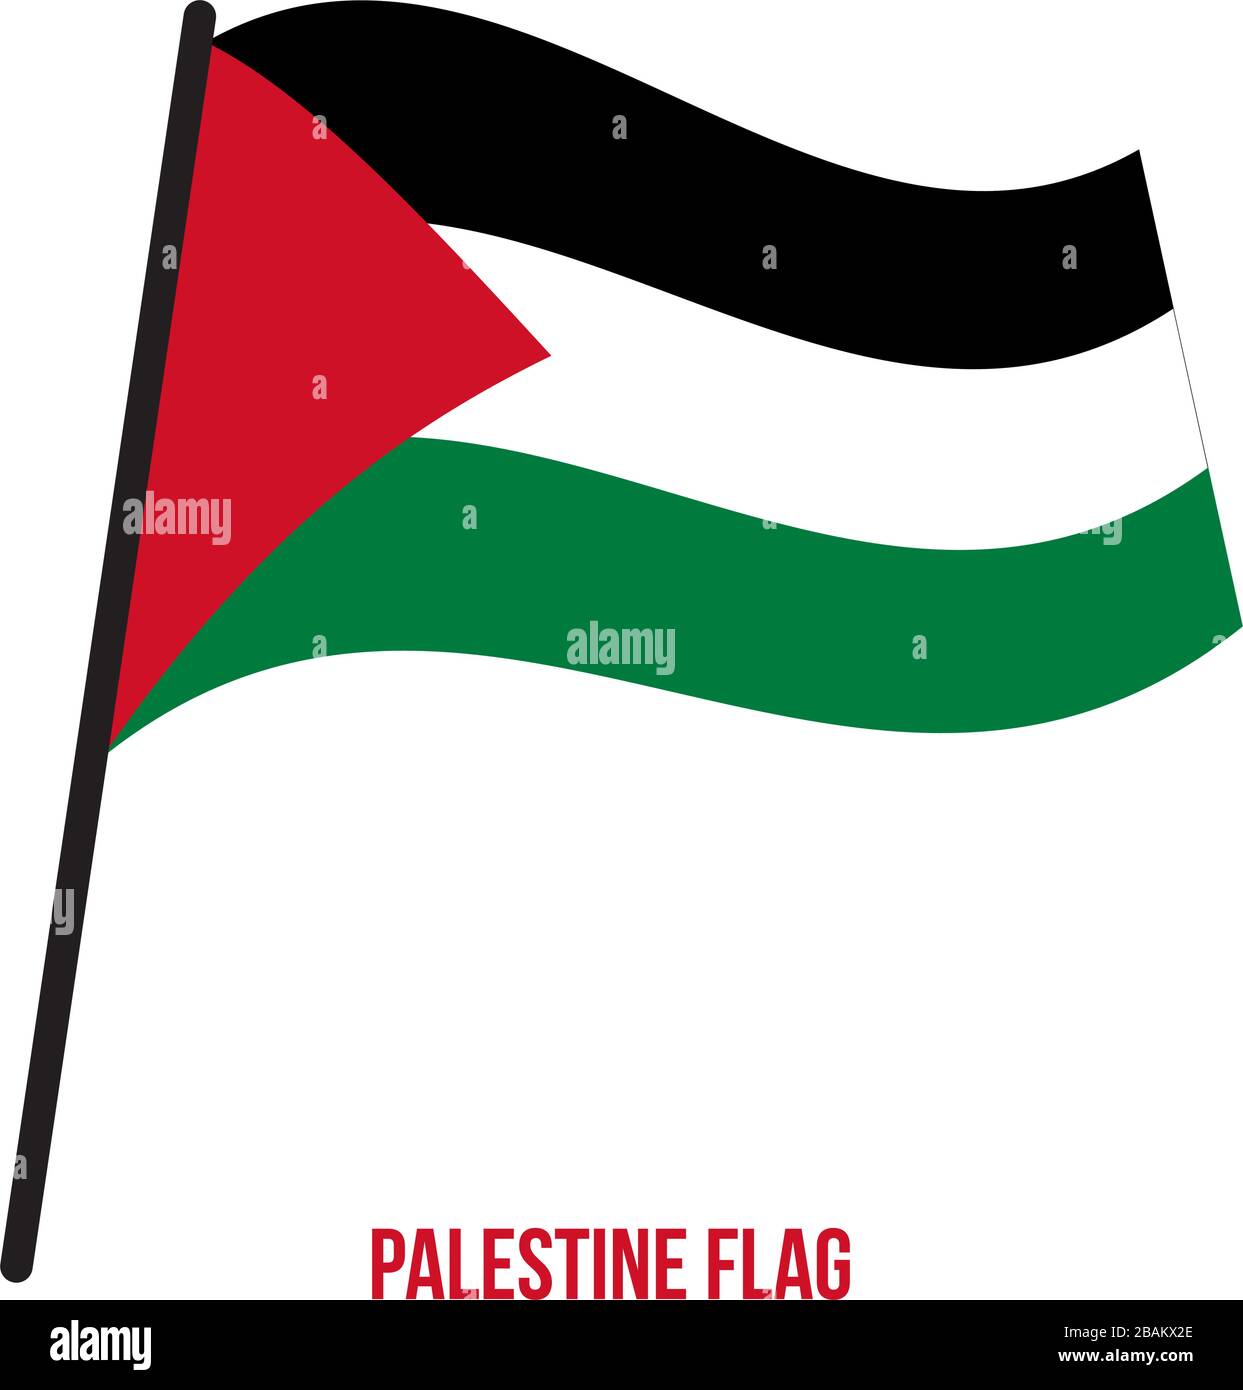 Palestine Flag Waving Vector Illustration on White Background ...